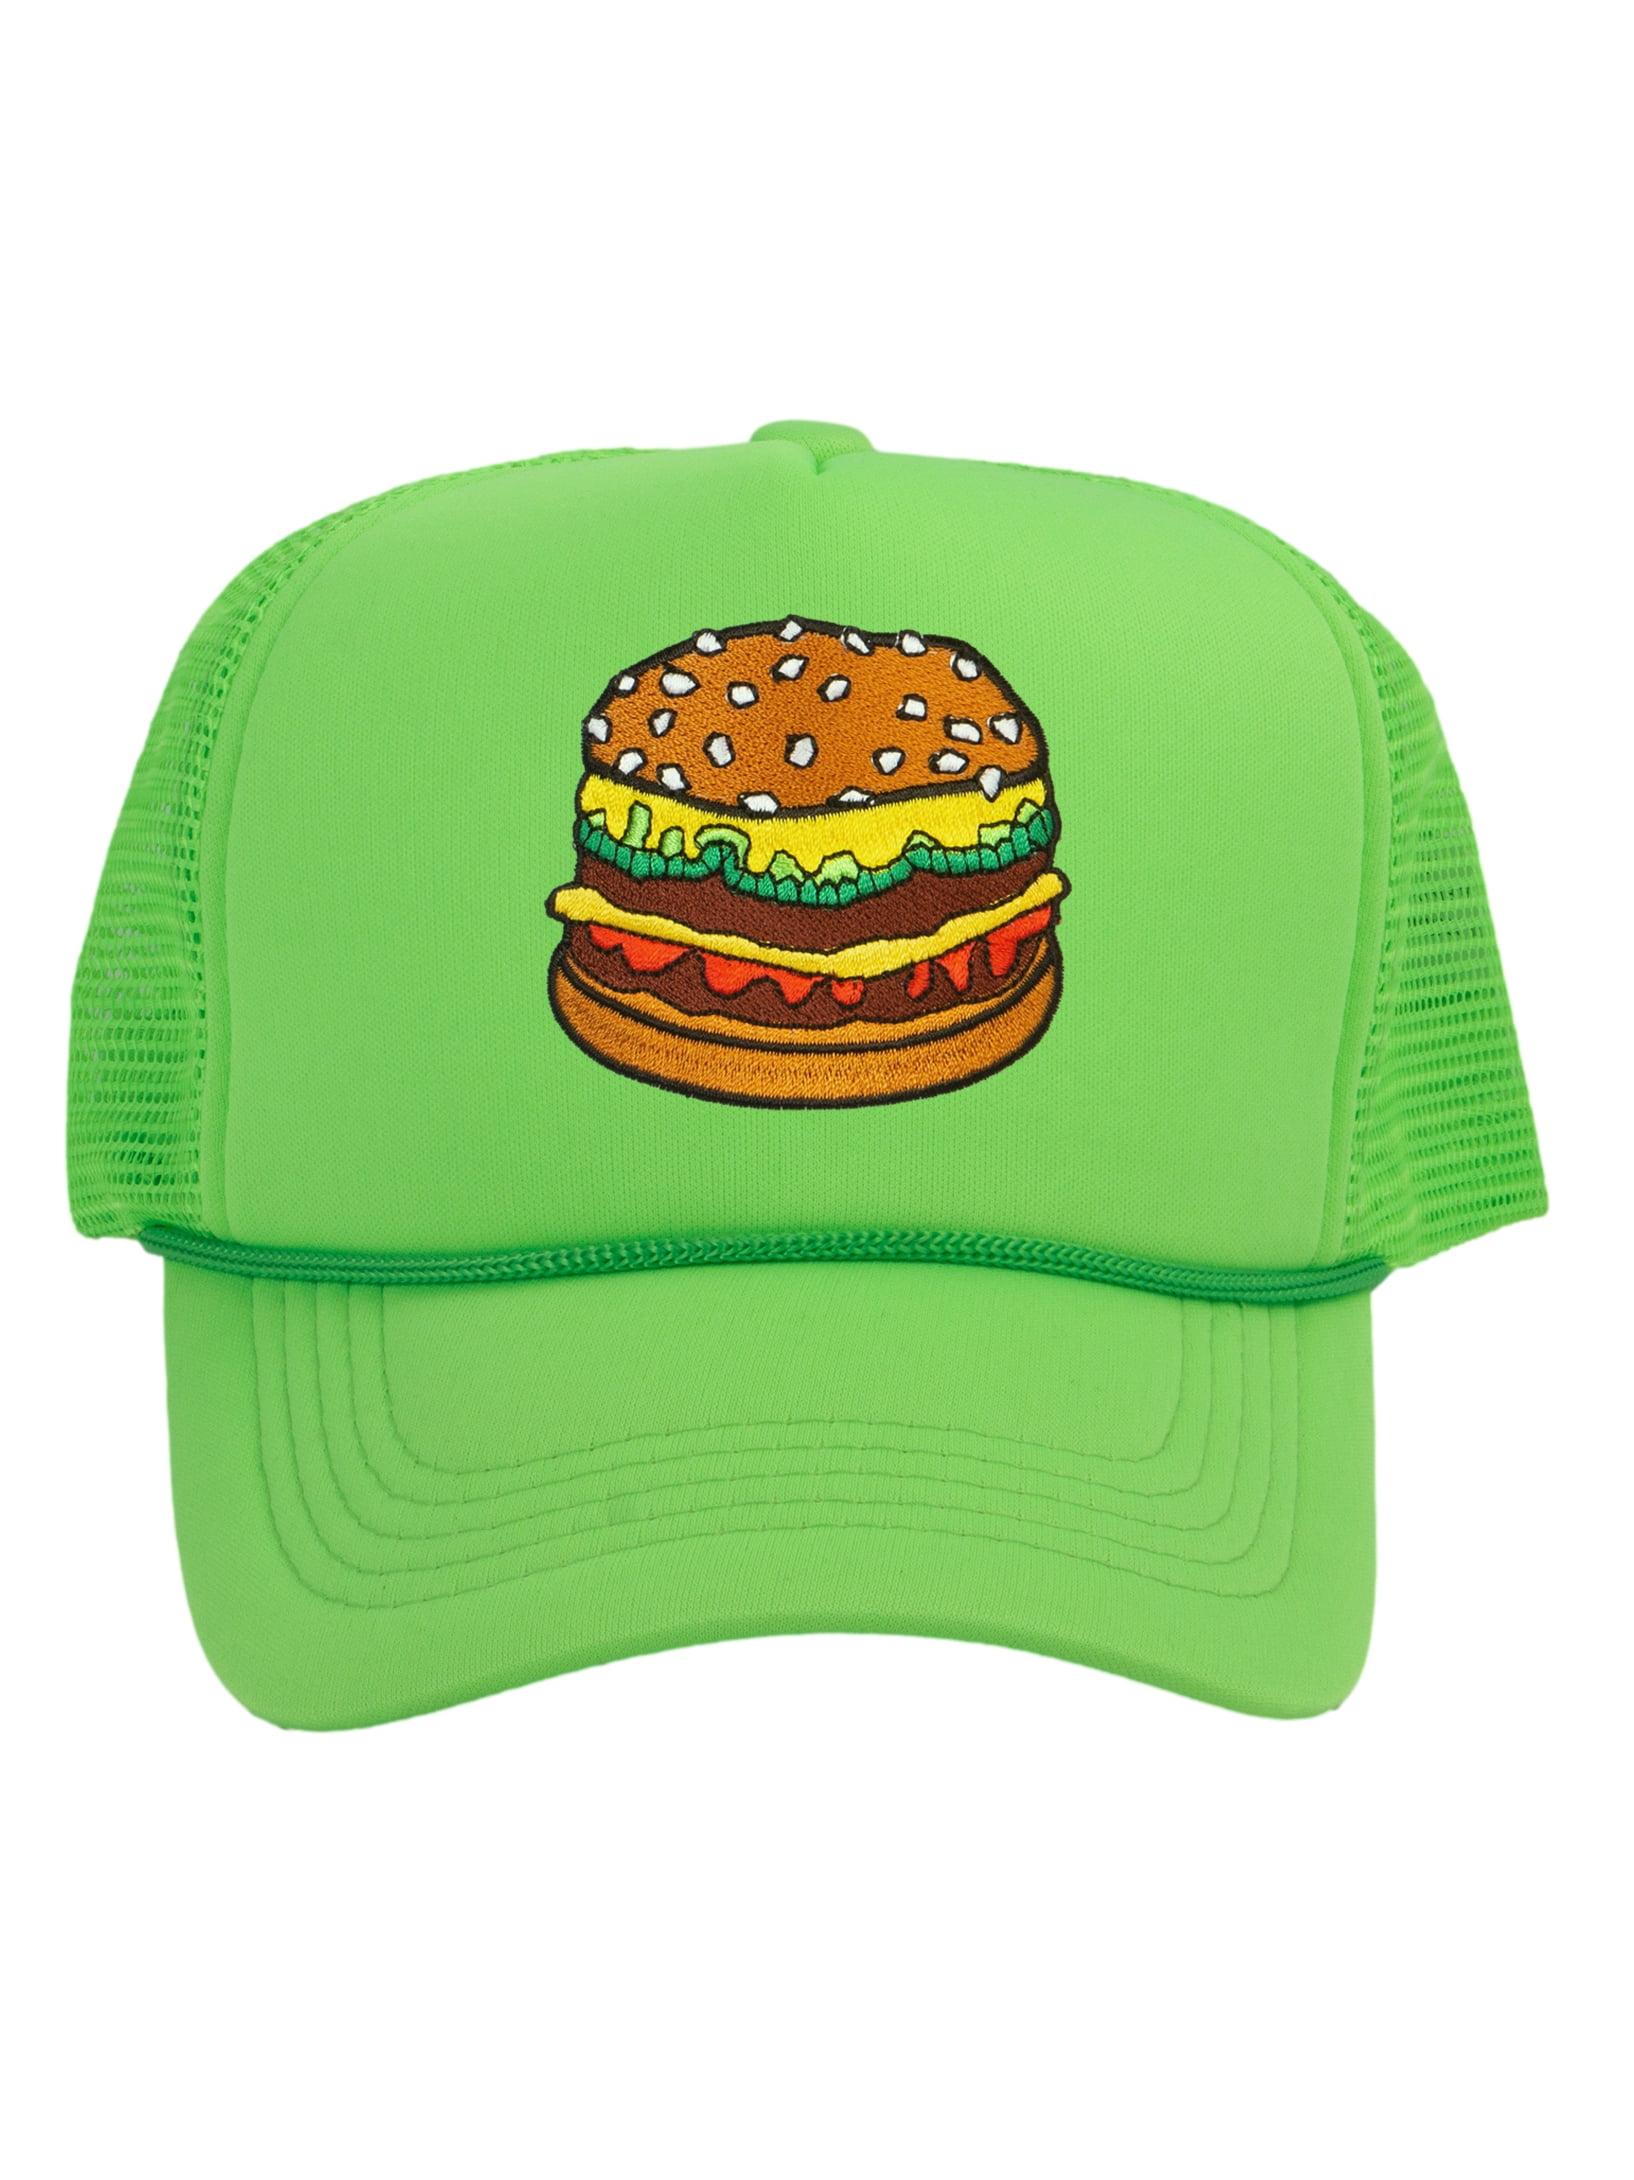 Top Headwear Hamburger Cheeseburger Trucker Hat - Men's Snapback Burger  Food Cap Neon Green